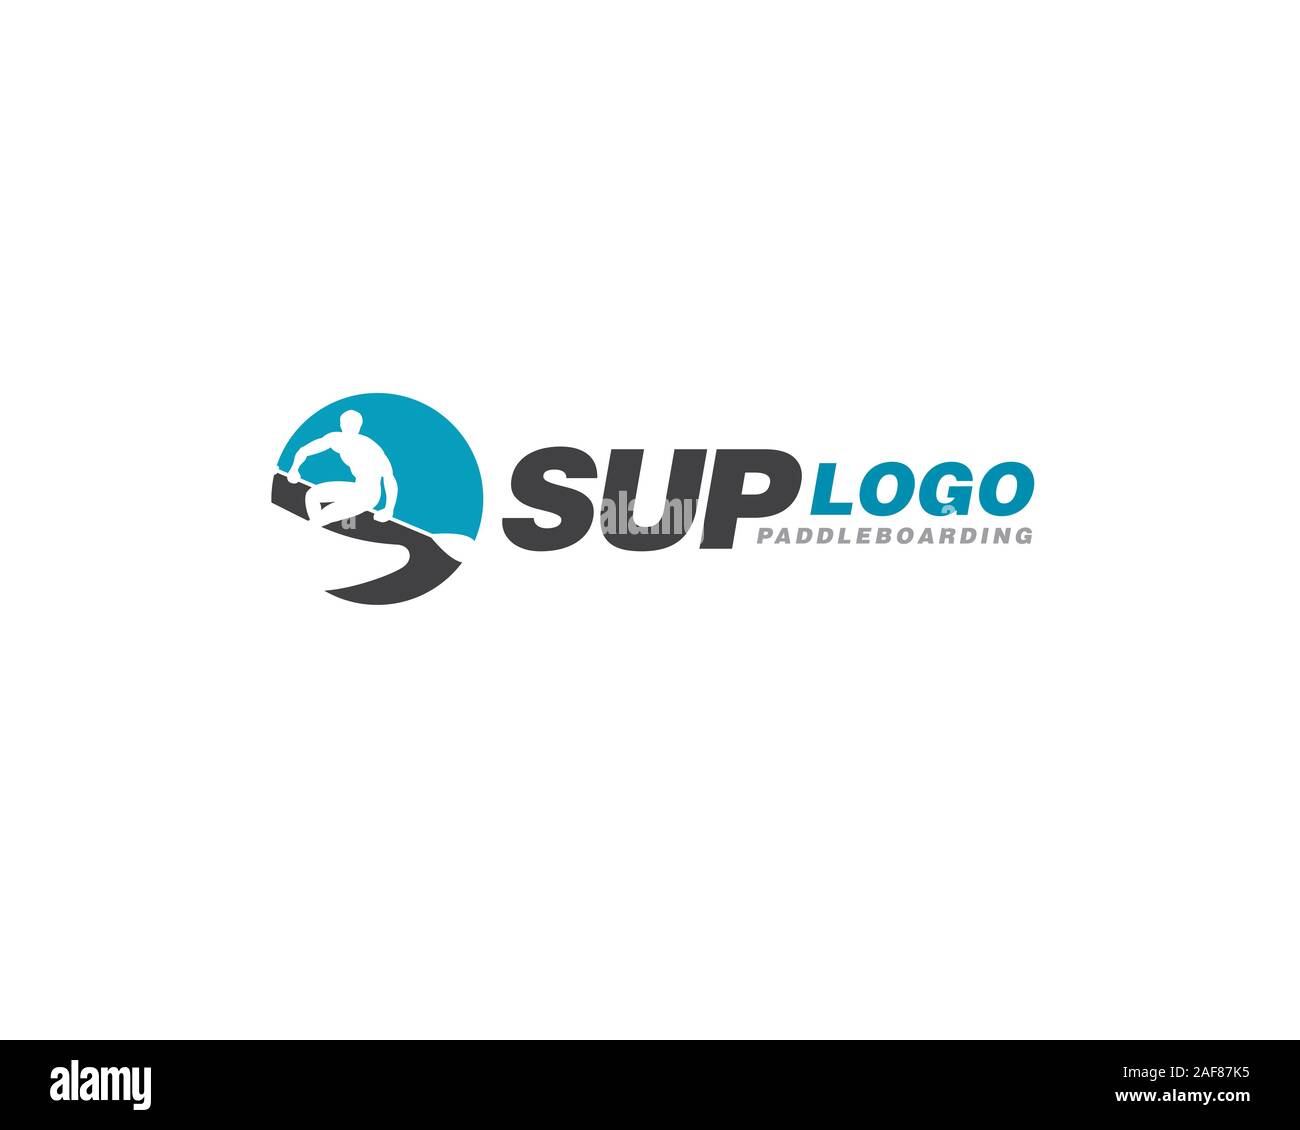 paddleboarding logo 2 Stock Vector